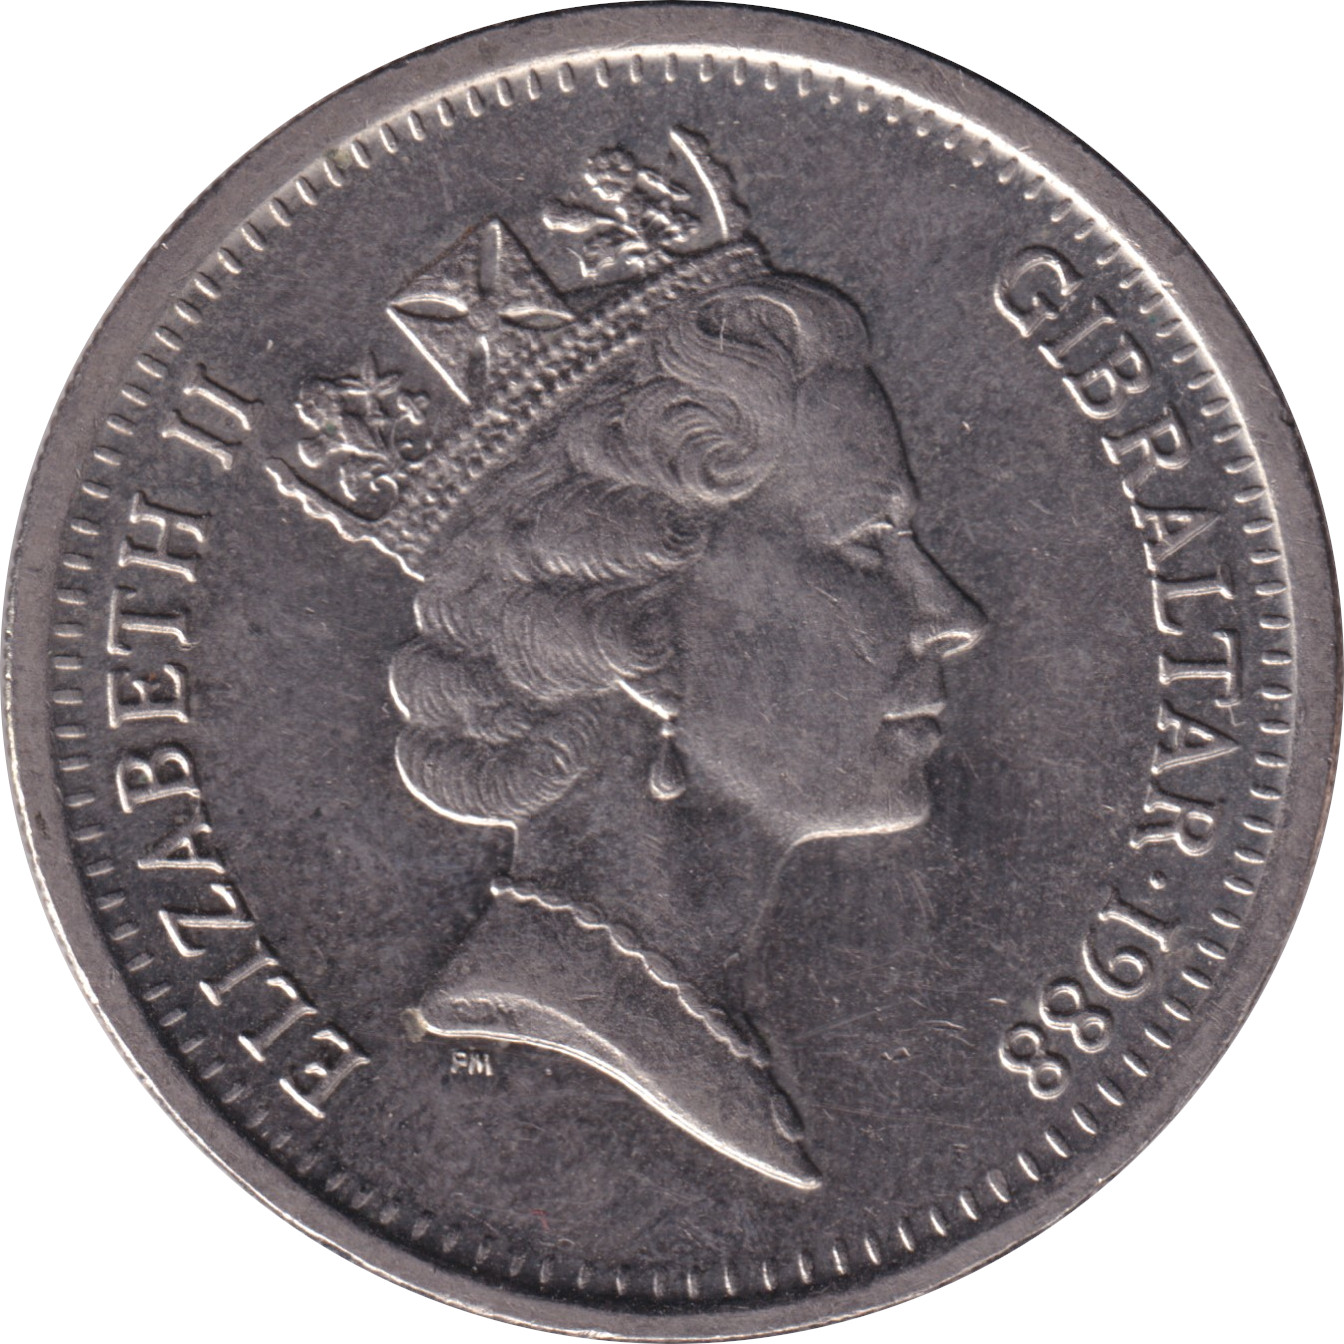 10 pence - Elizabeth II - Tête mature - Type lourd